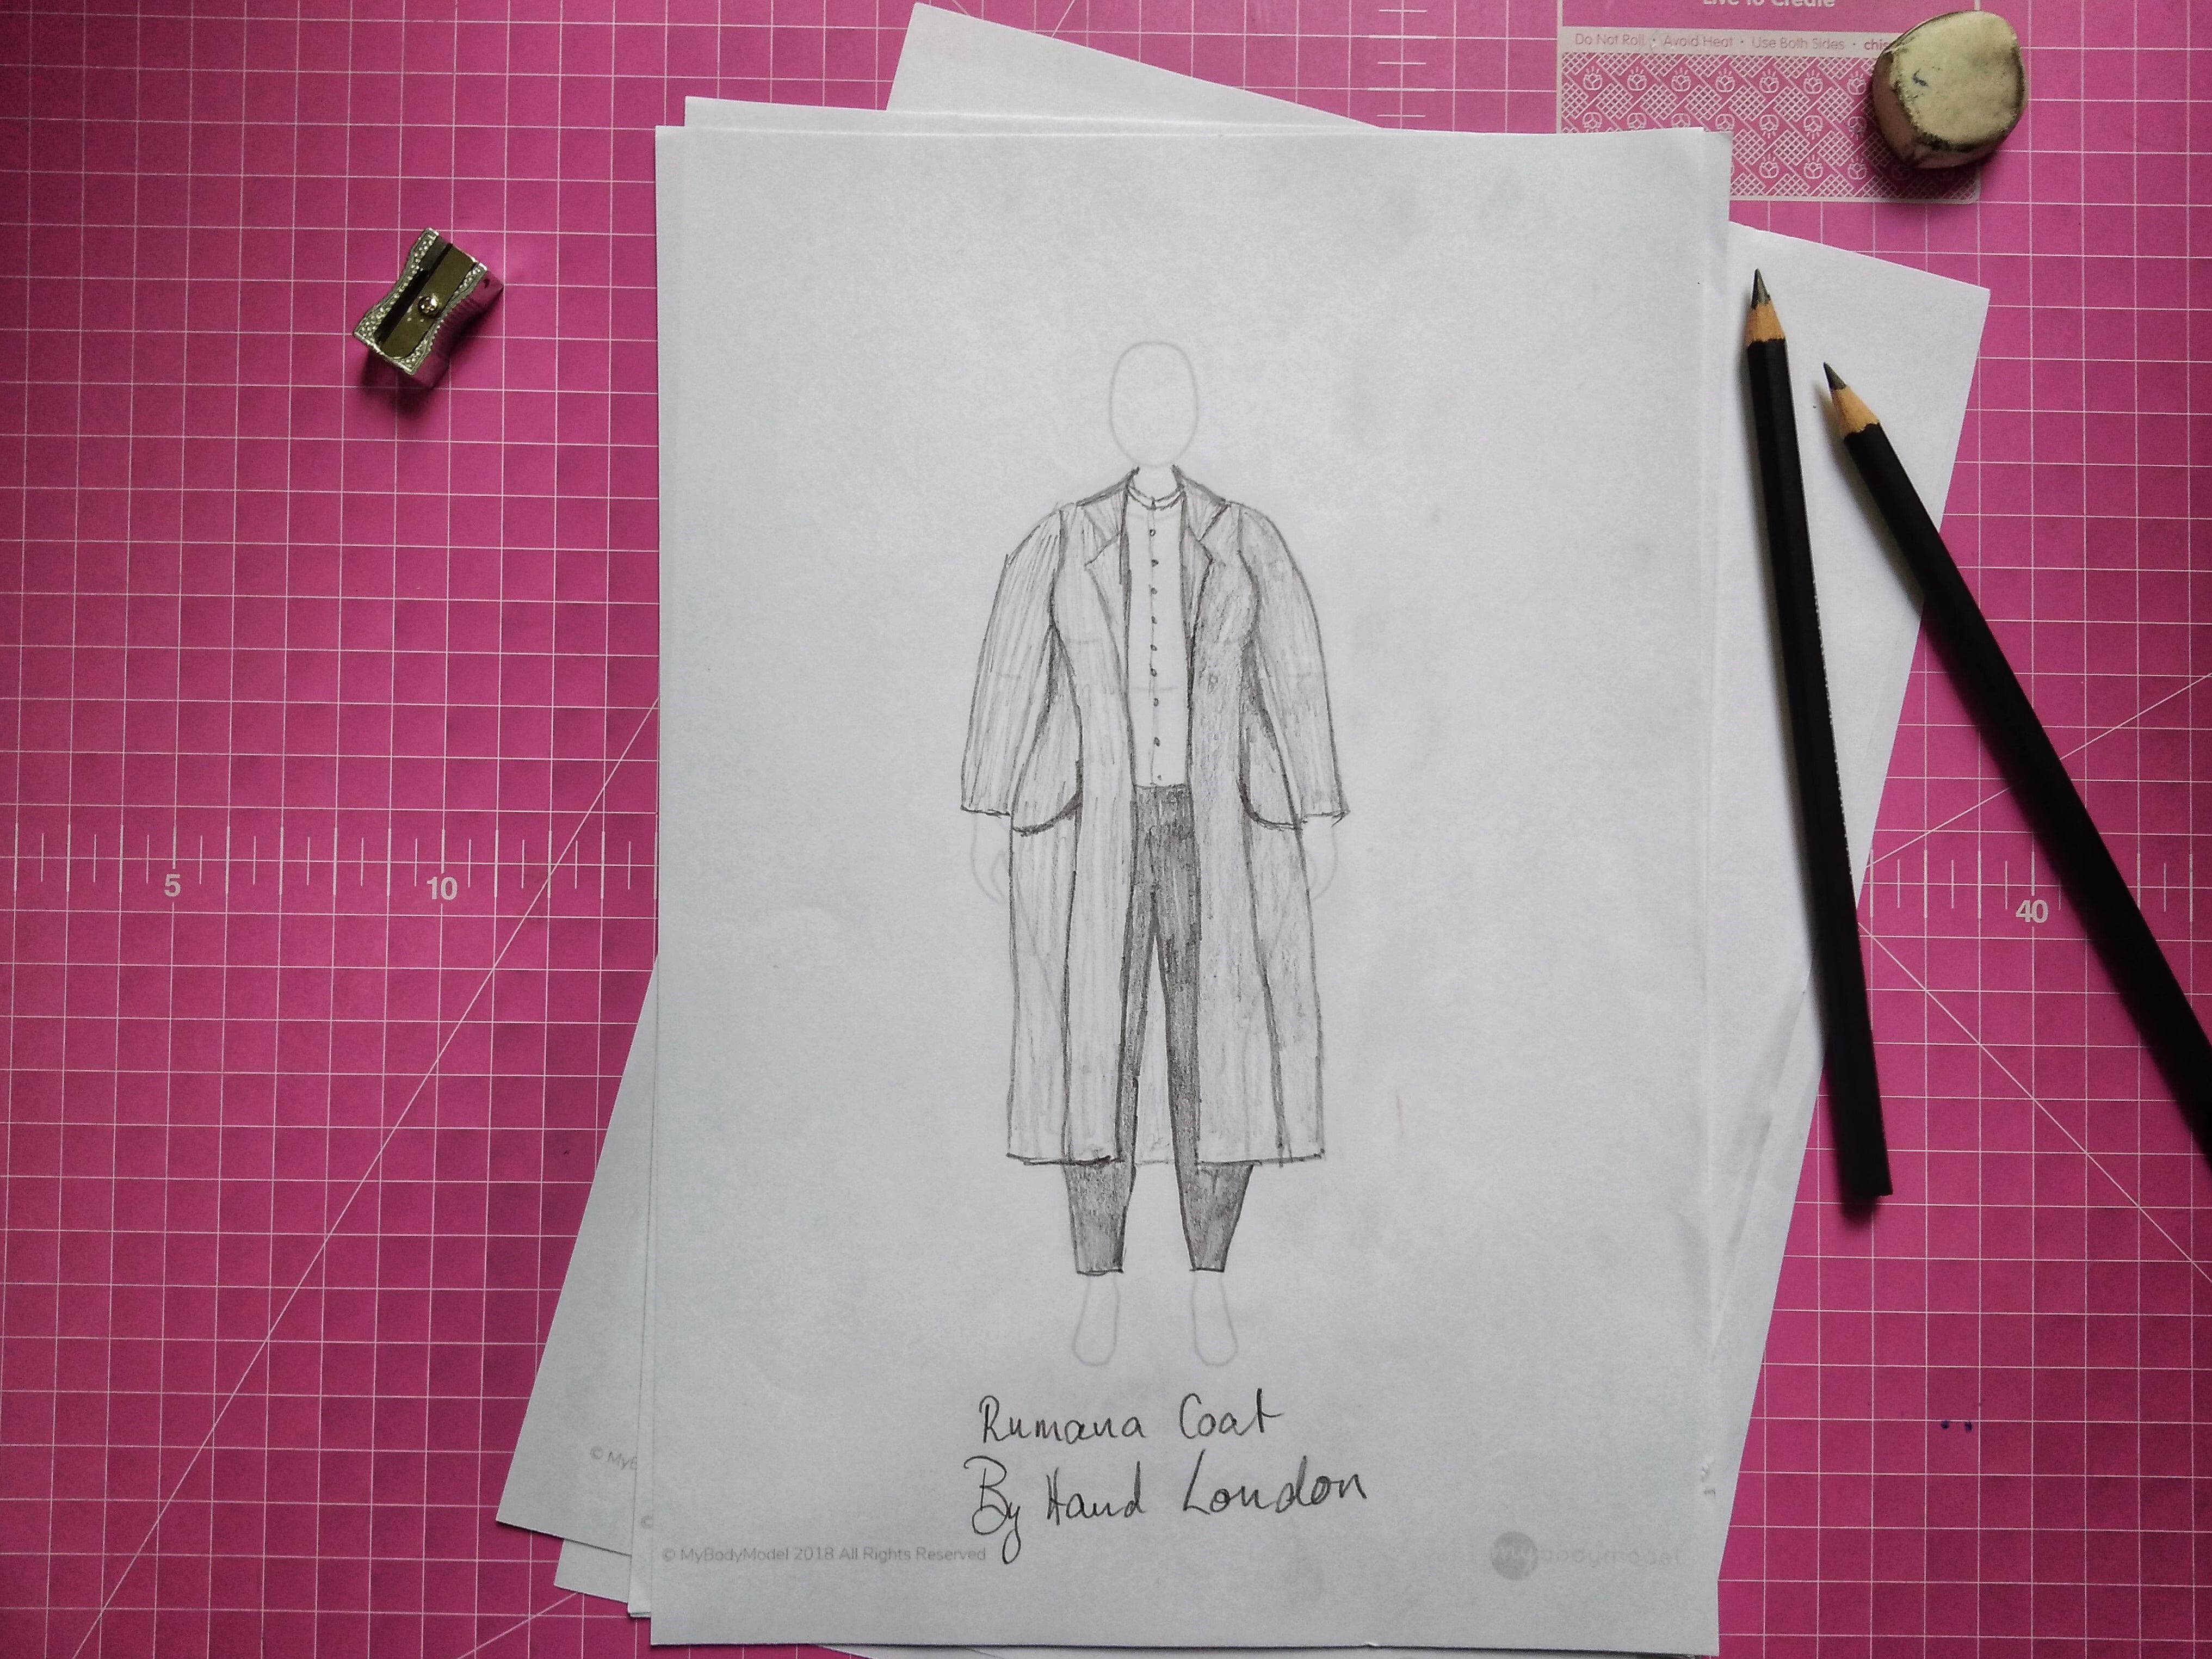 MyBodyModel Sketch of Rumana Coat By Hand London by Thandi